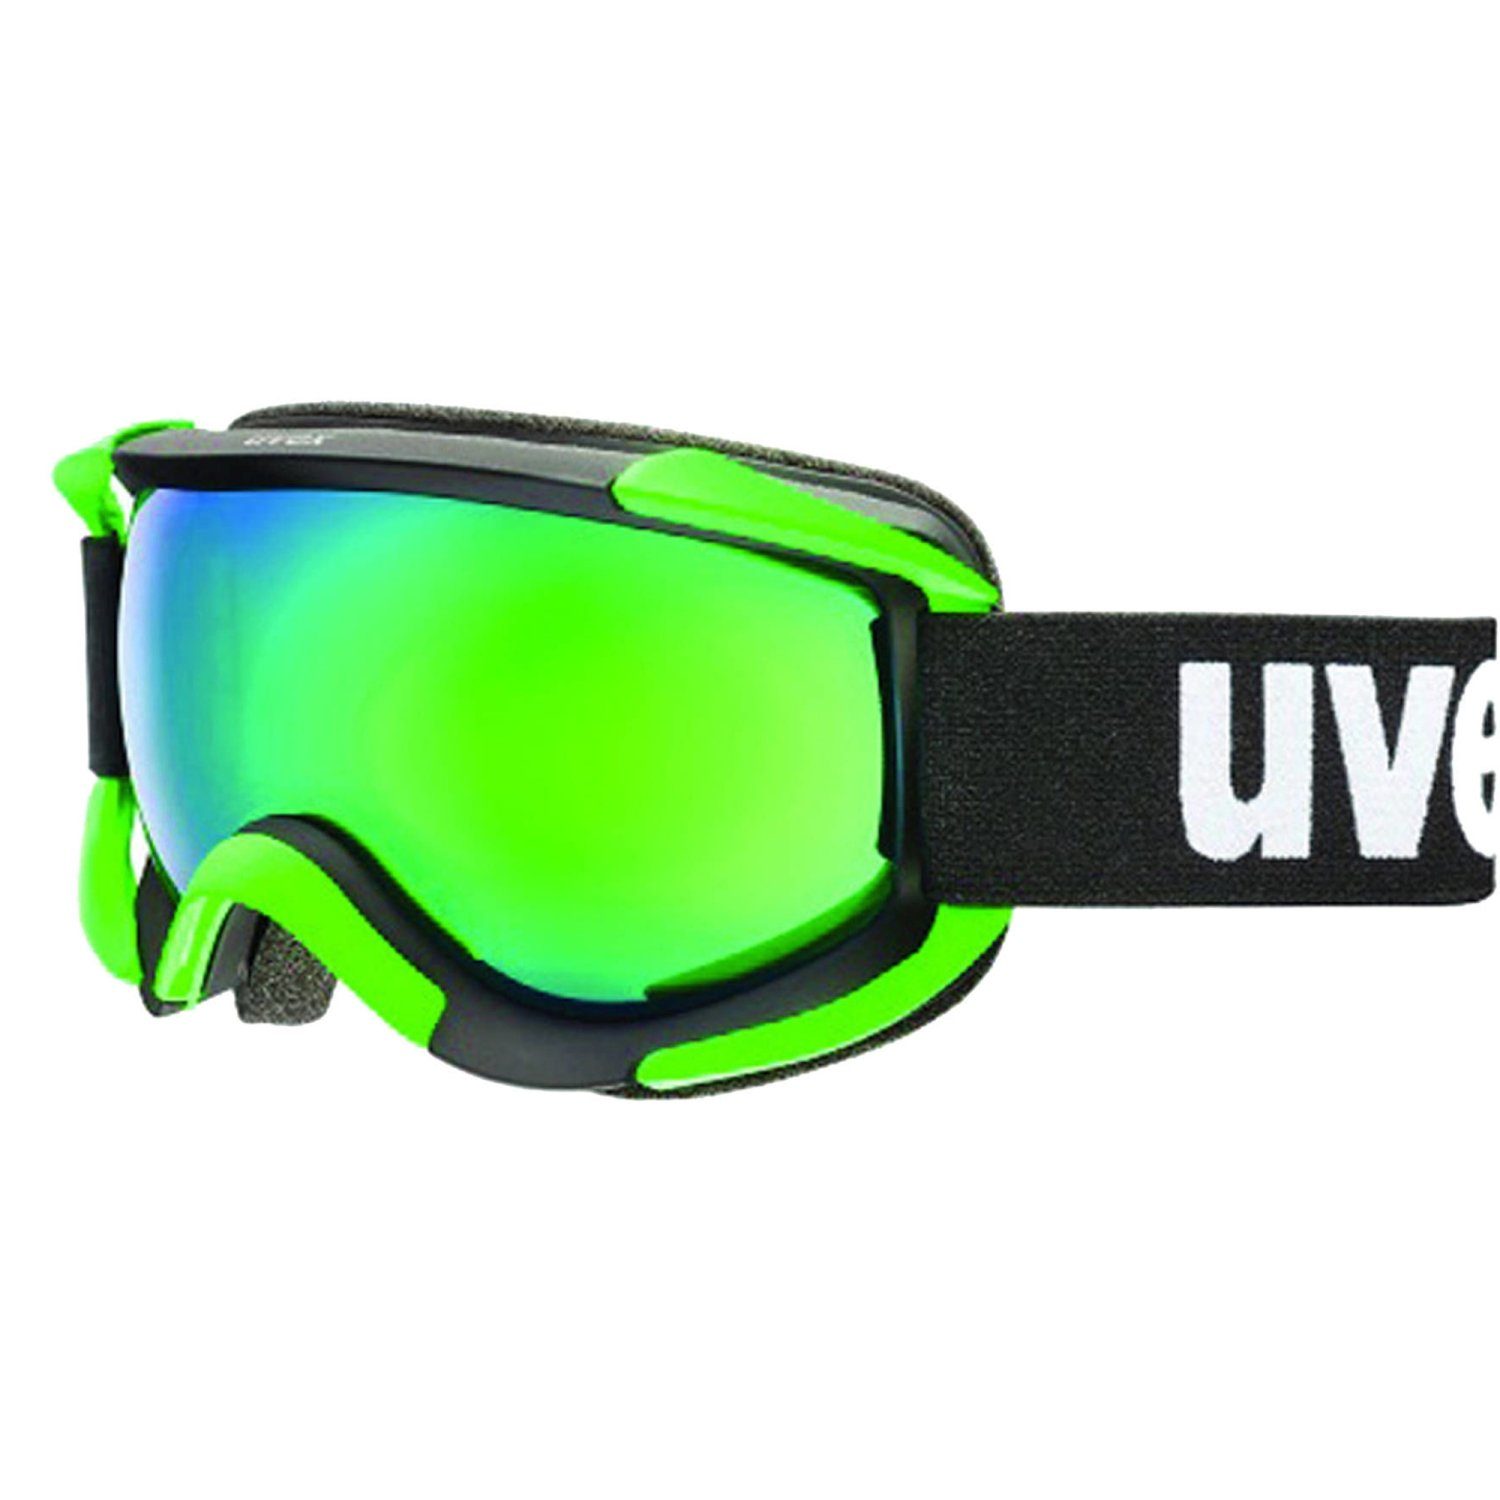 Uvex Snowboardbrille Sioux schwarz/grün Ski-/Snowboardbrille